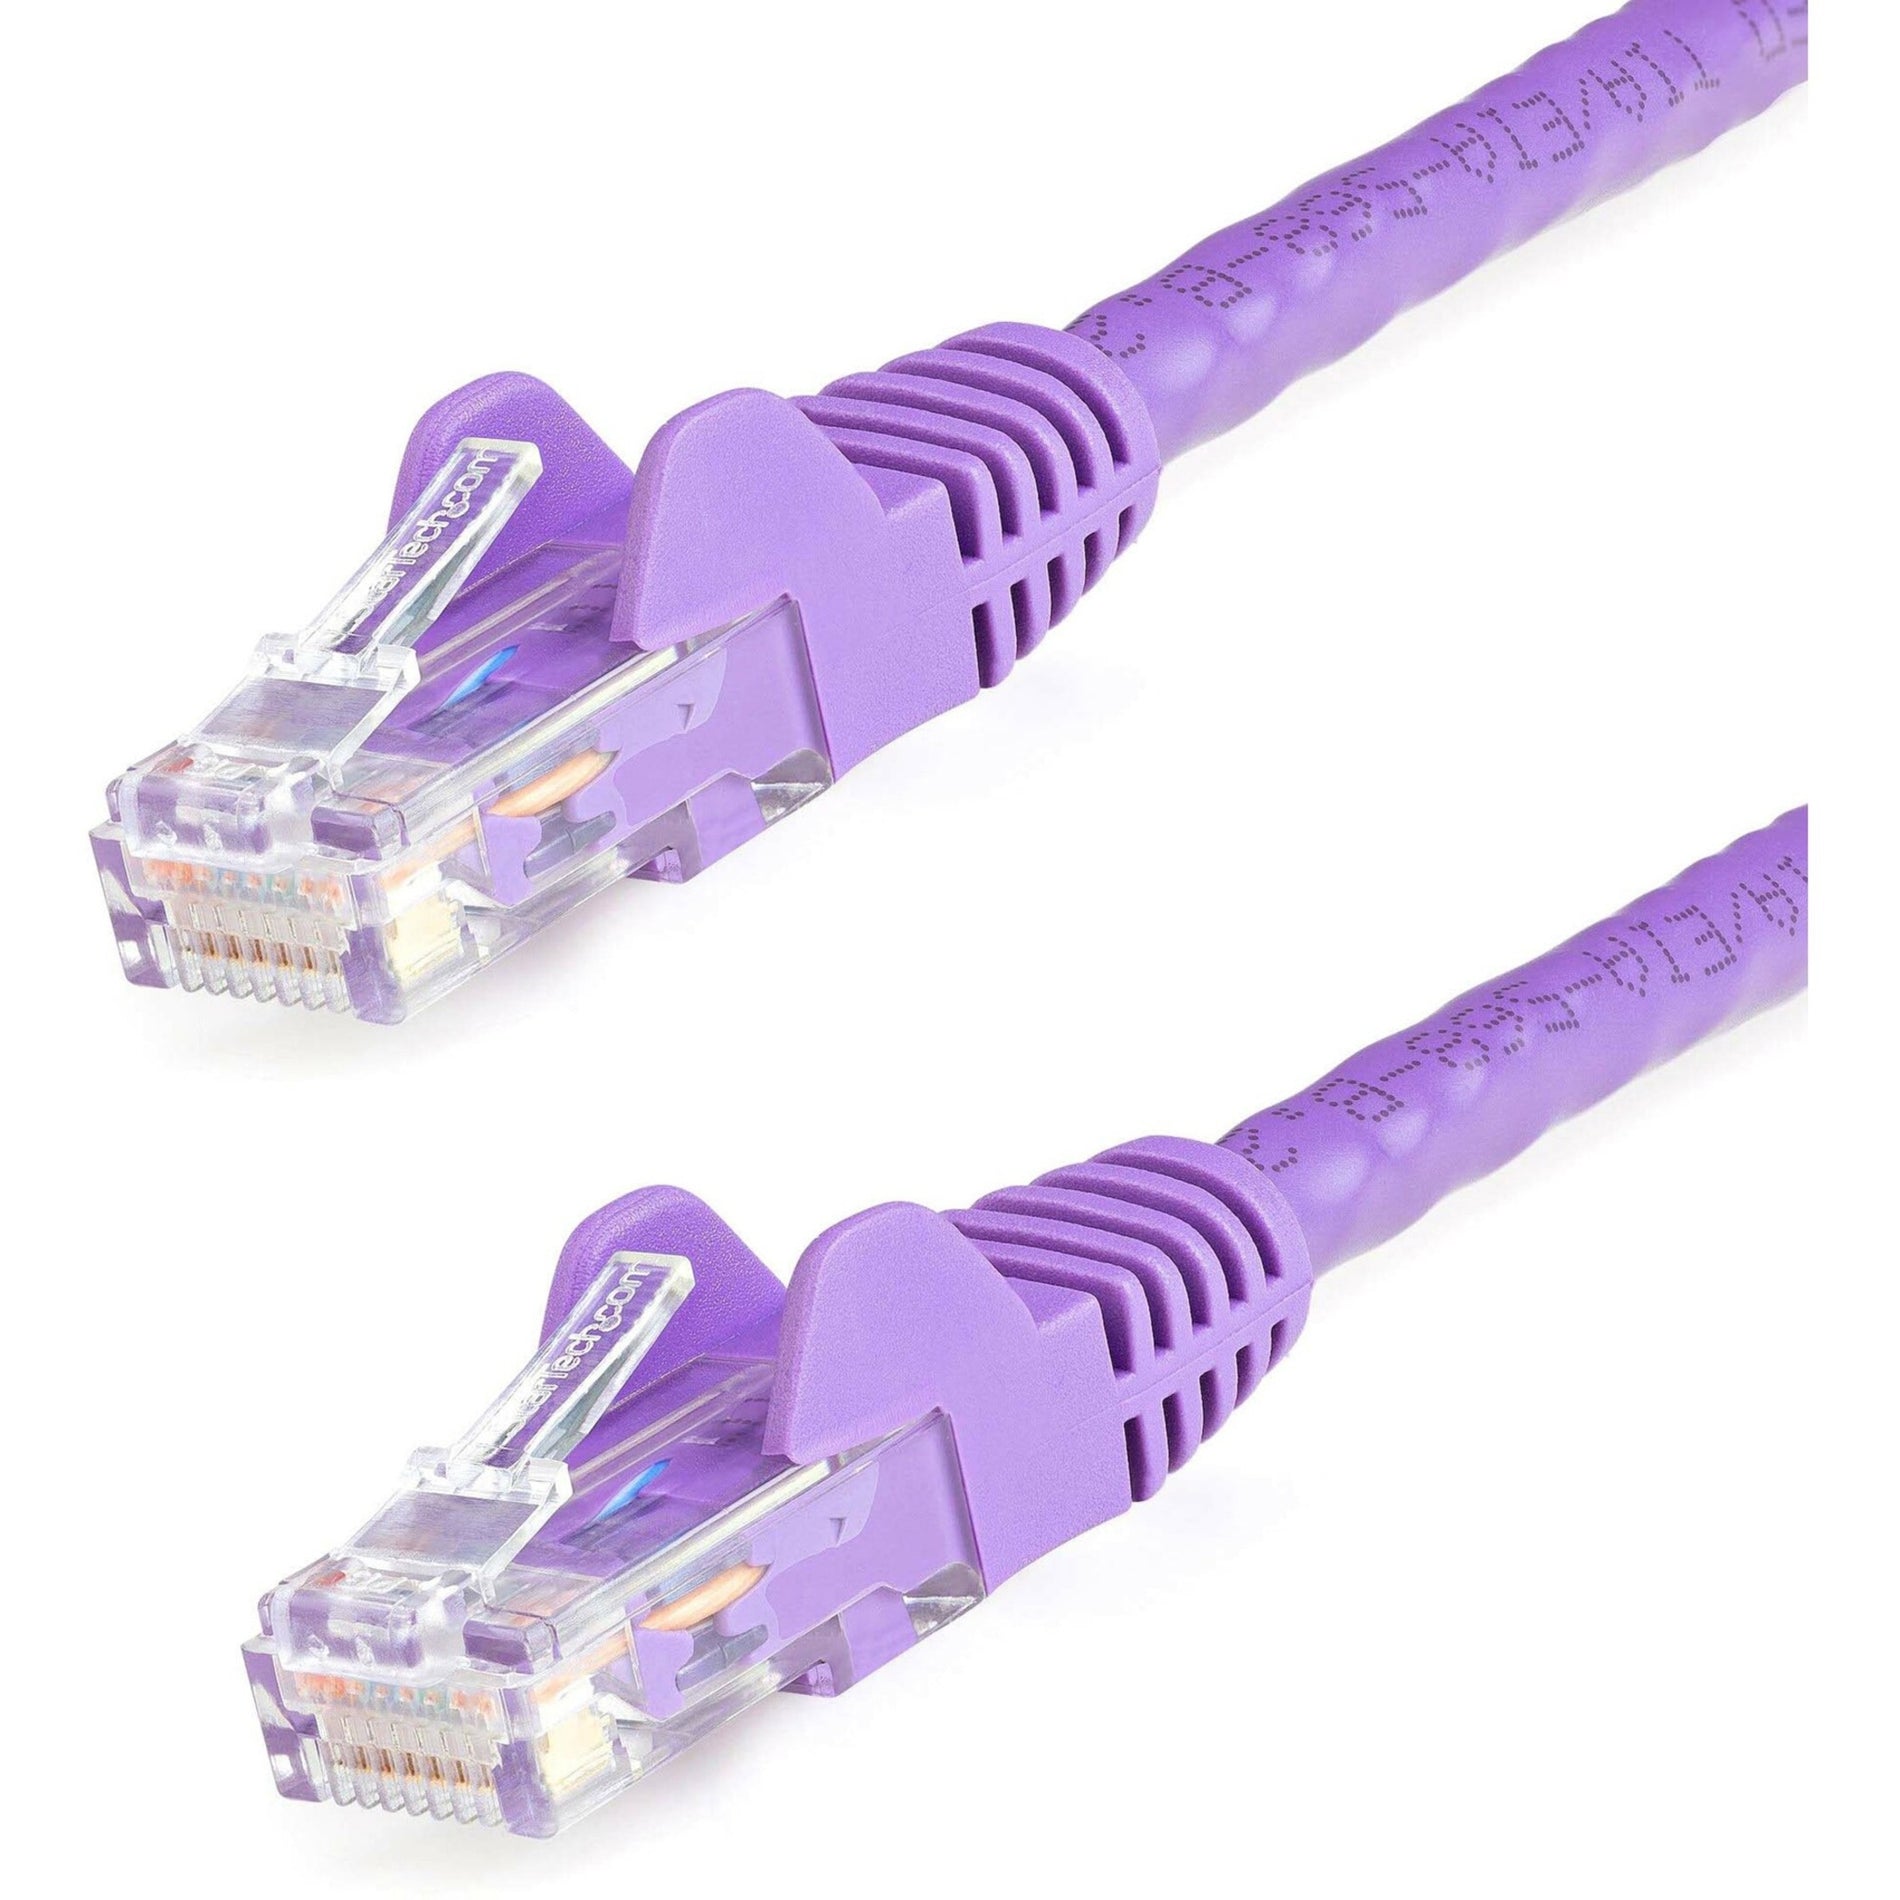 StarTech.com N6PATCH75PL 75 ft Purple Snagless Cat6 UTP Patch Cable, Lifetime Warranty, 10 Gbit/s Data Transfer Rate, RJ45 Connector